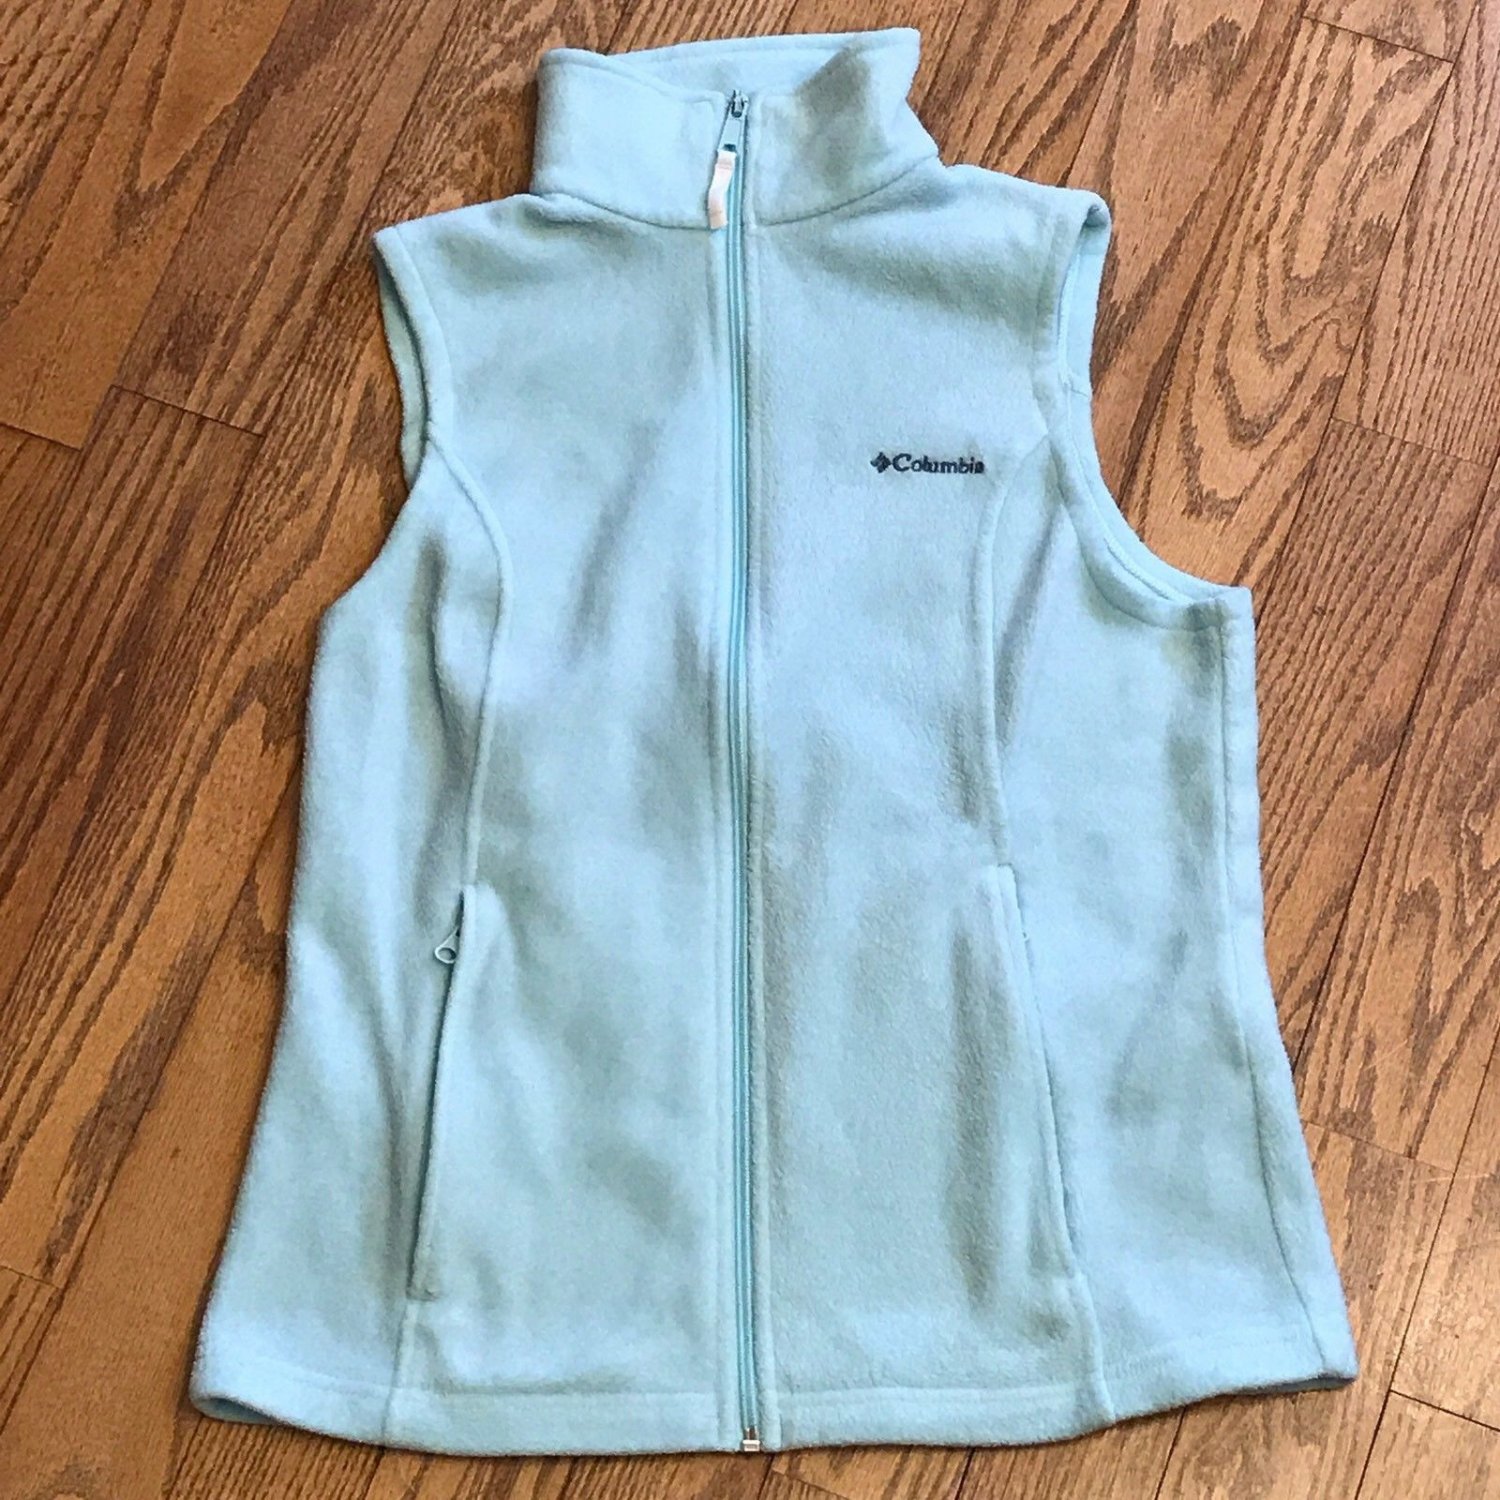 Columbia Sportwear Company Womens Aqua Sleeveless Zipper Fleece Vest Jacket